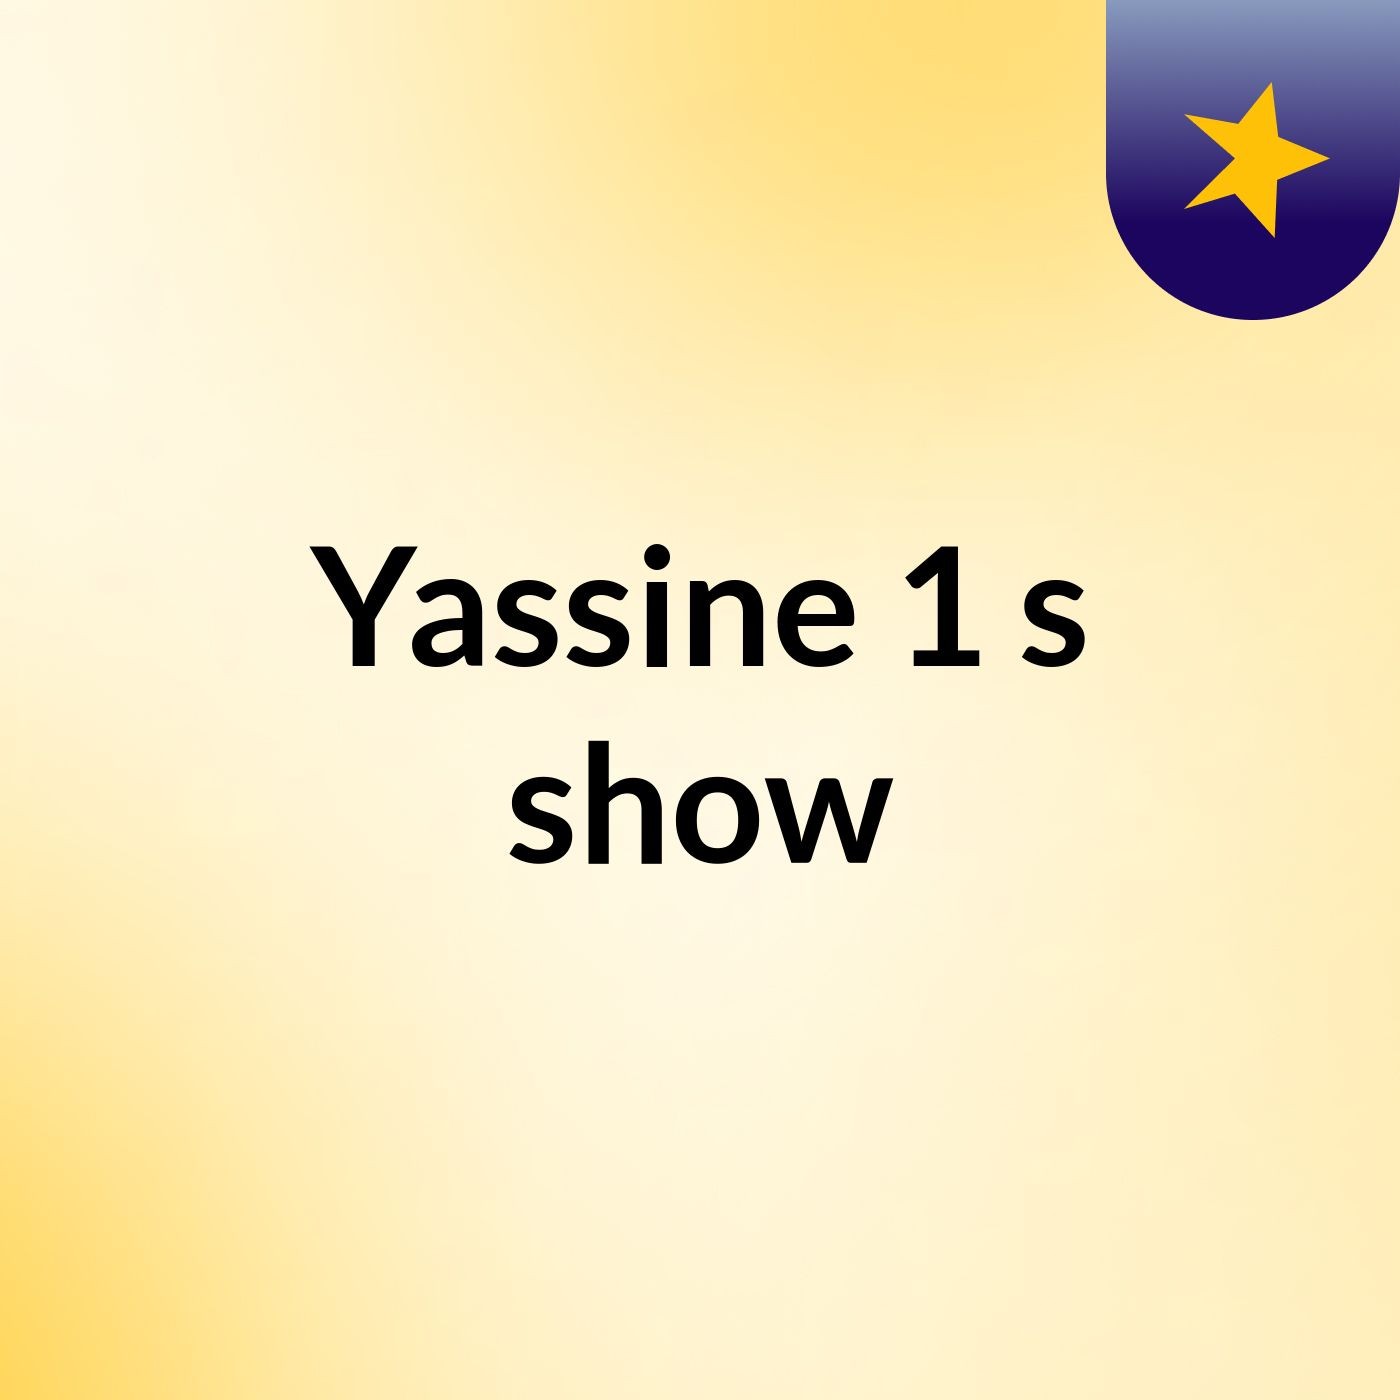 Yassine 1's show